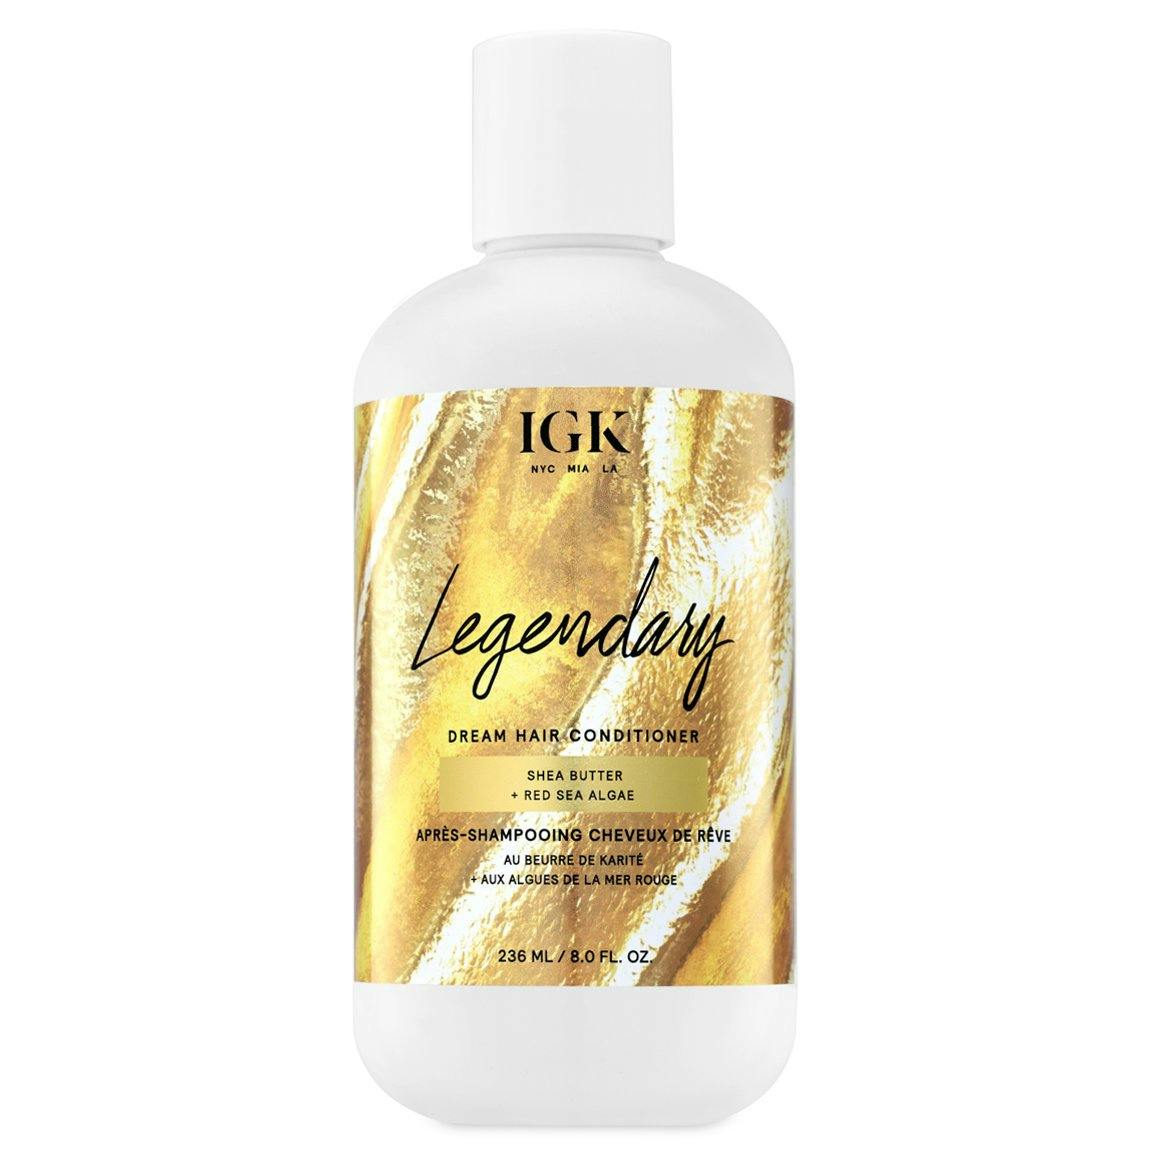 IGK Beach Club Texture Spray, 5 oz Ingredients and Reviews